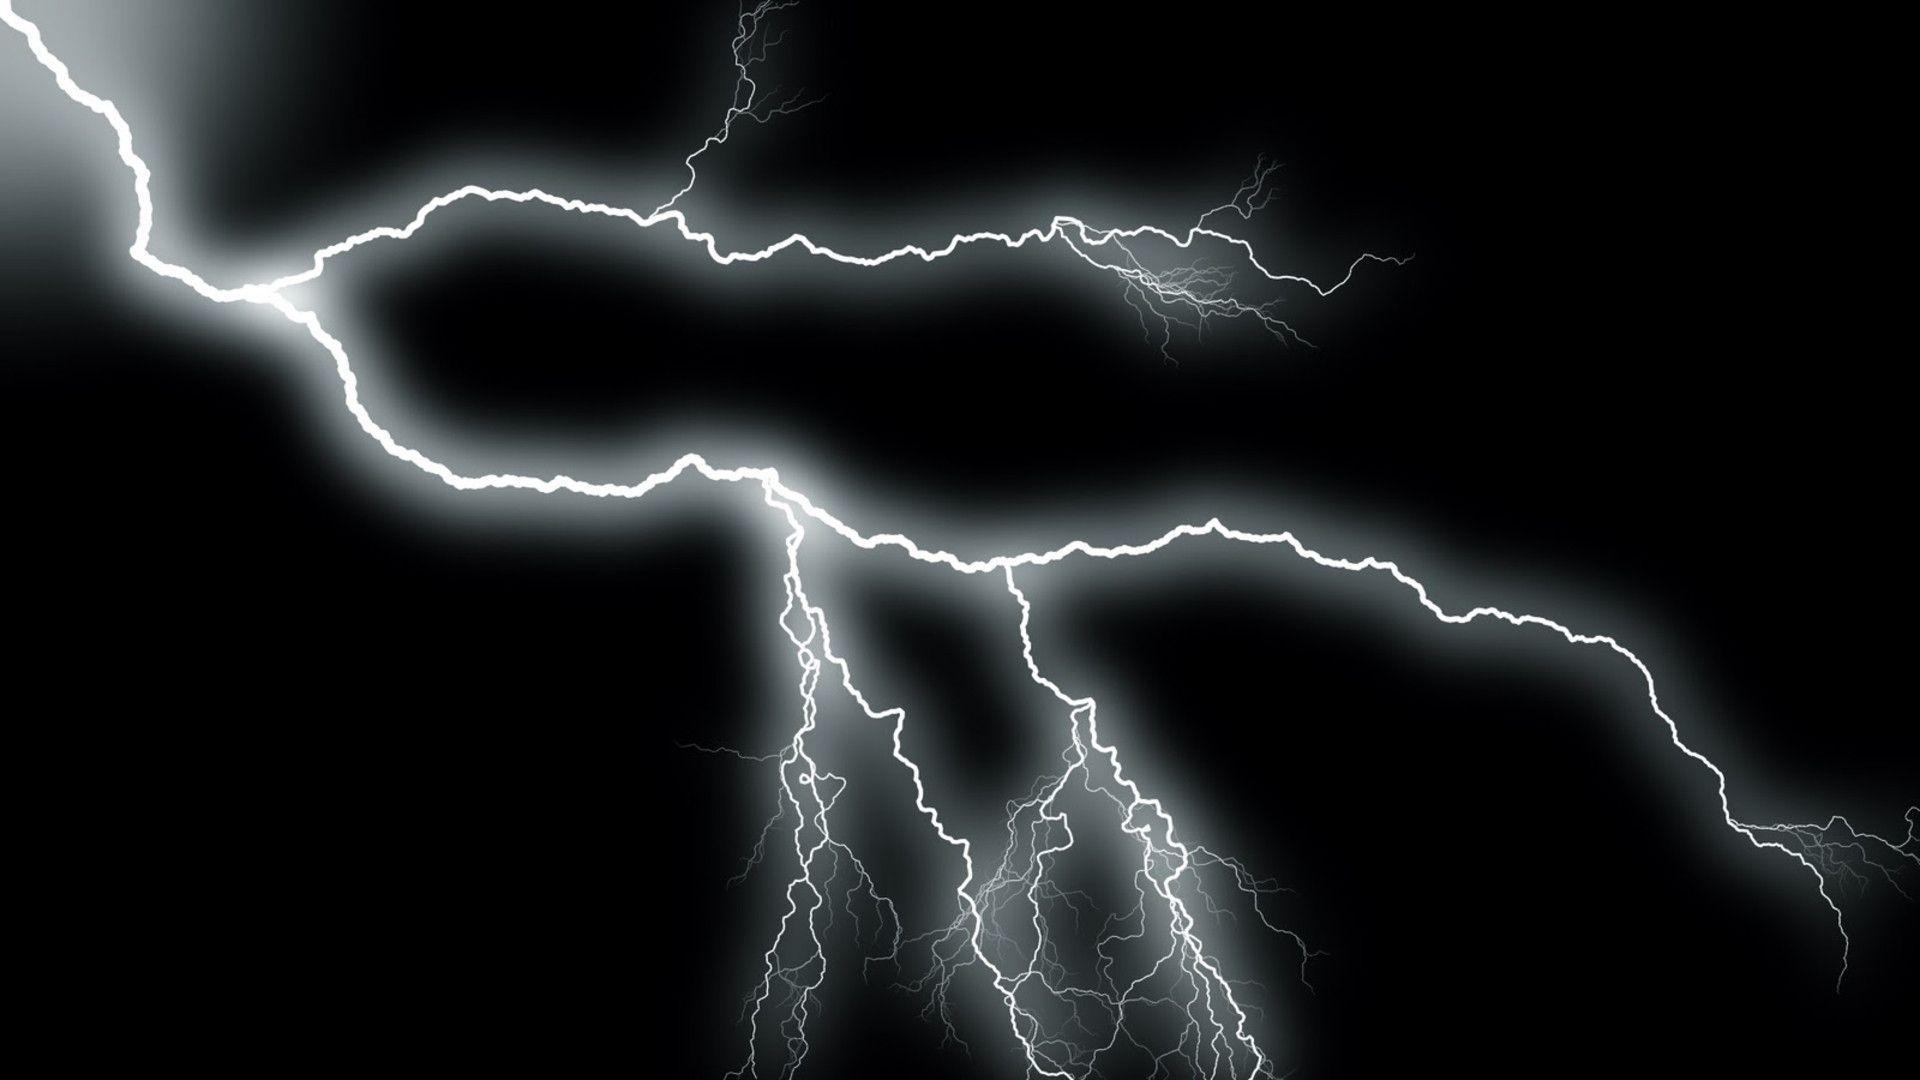 3339 Cute Lightning Bolt Images Stock Photos  Vectors  Shutterstock